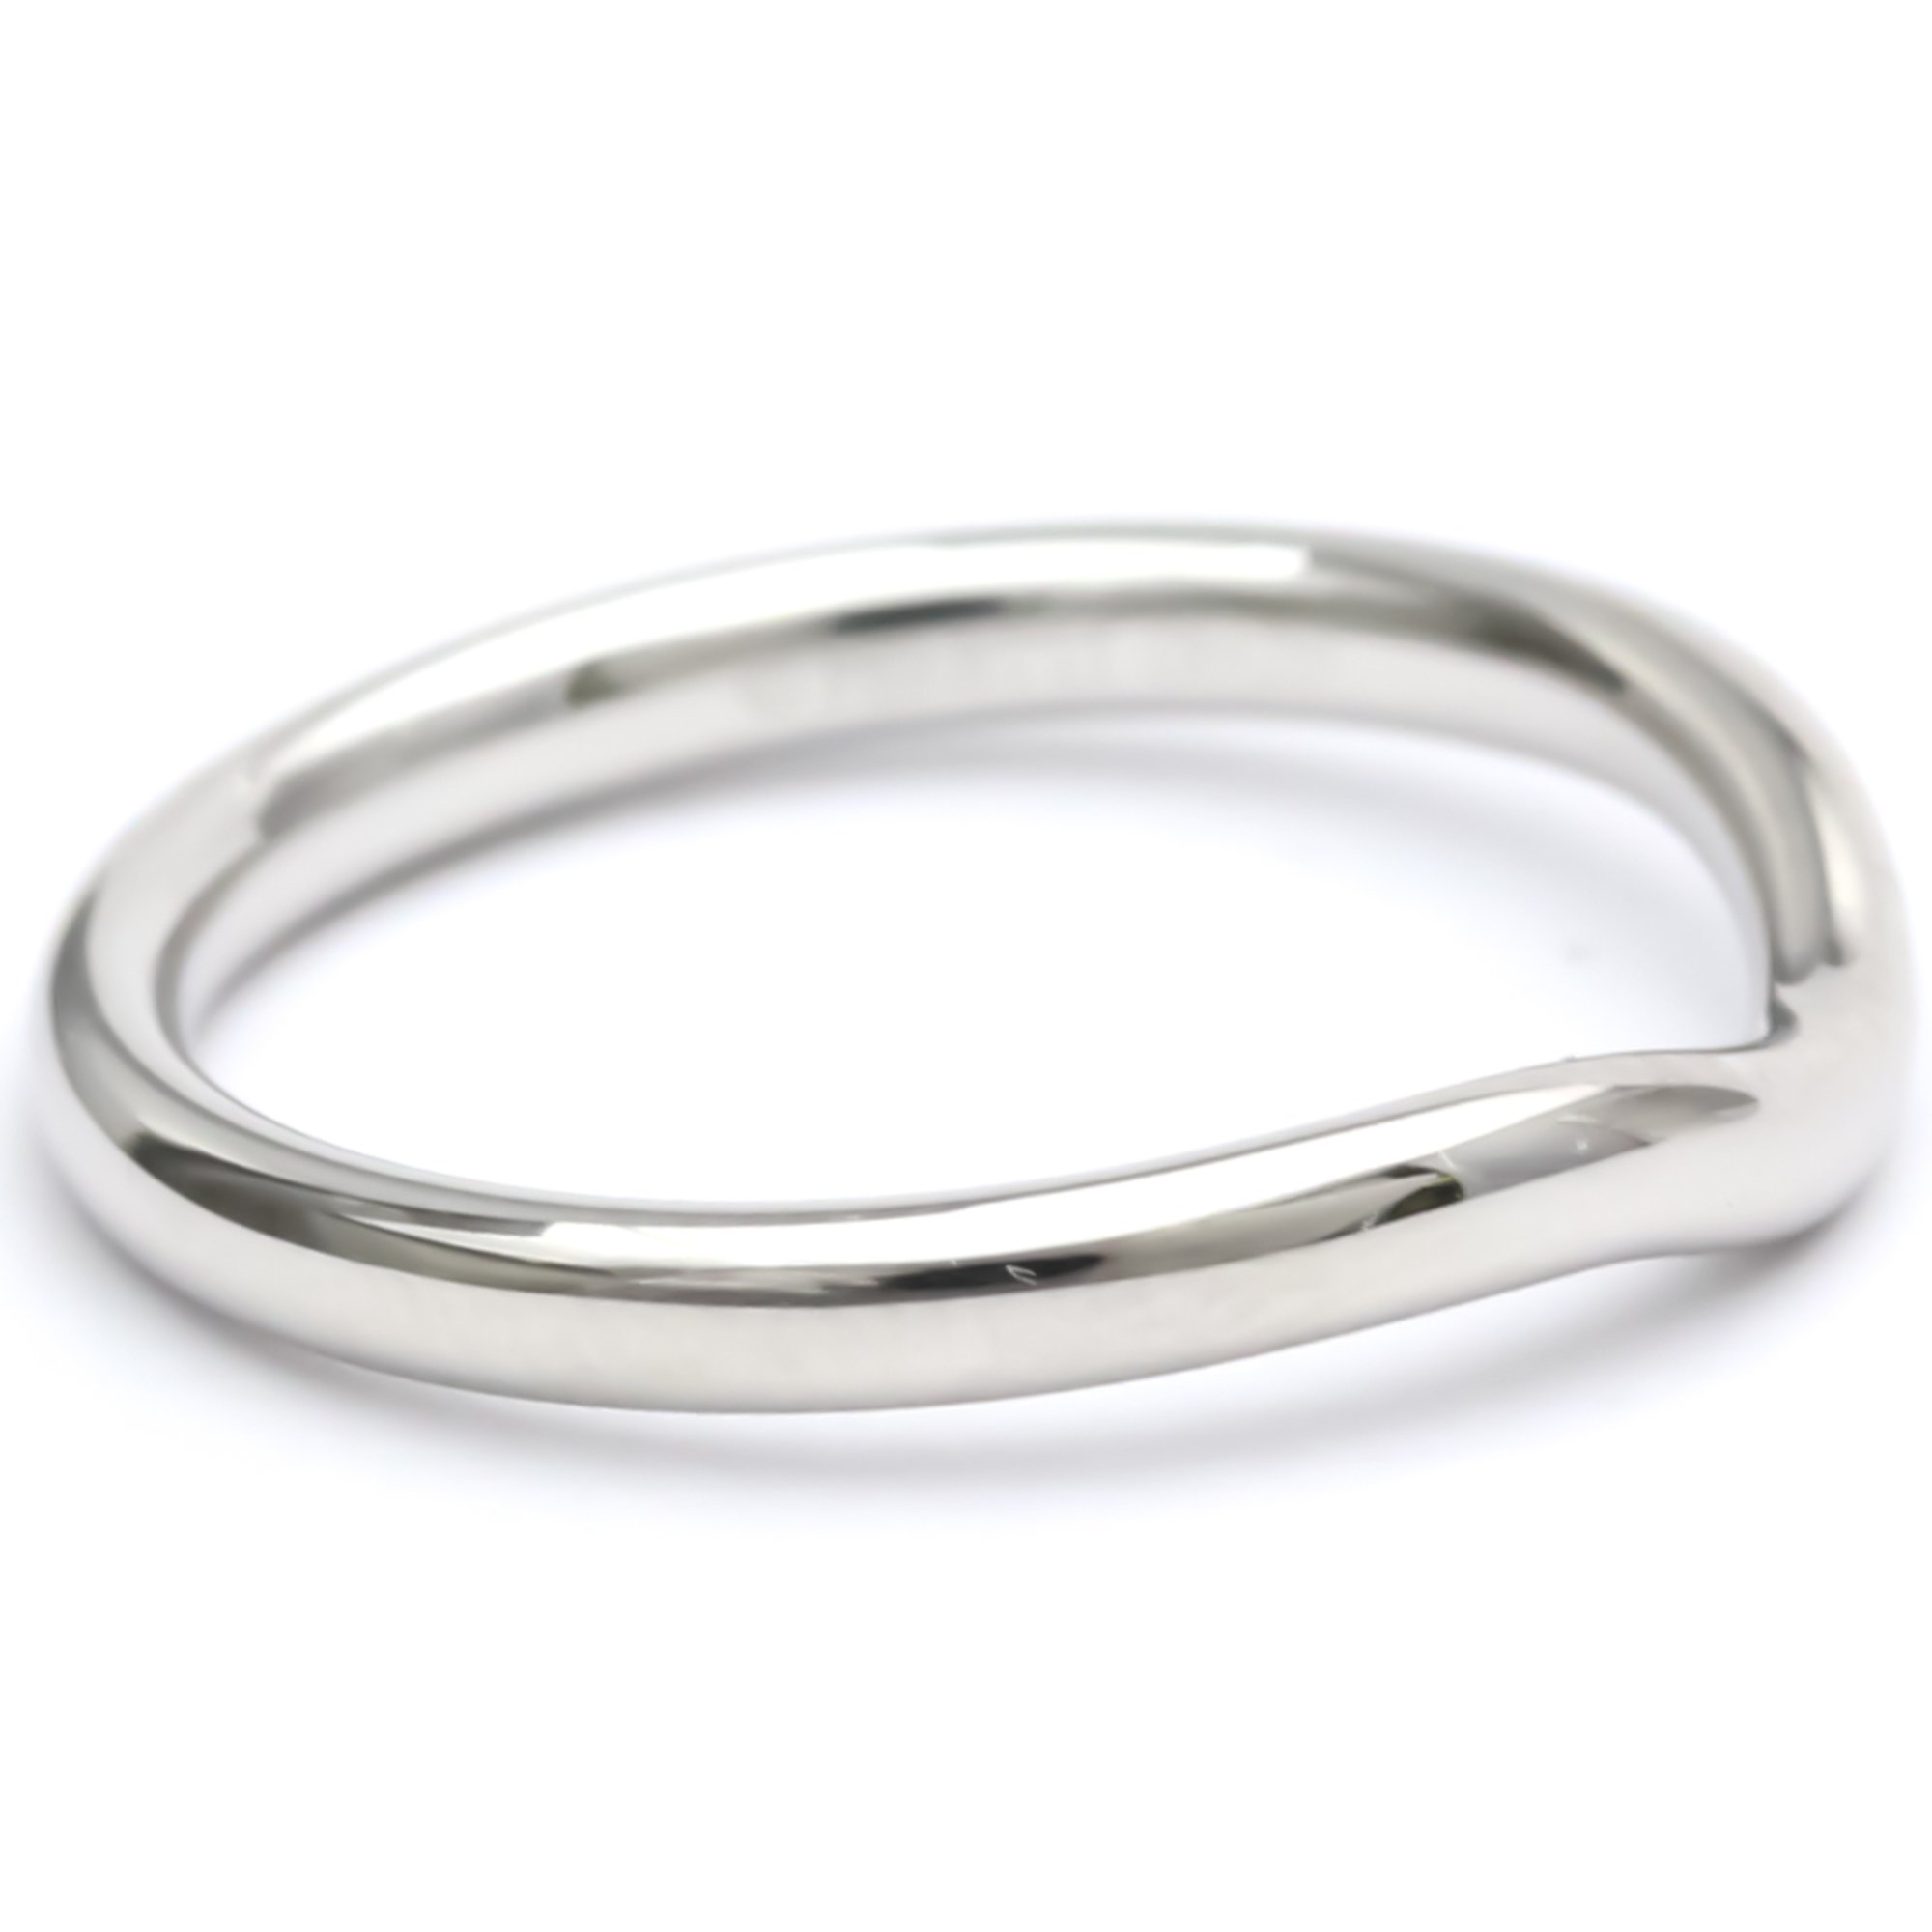 Polished TIFFANY Curved Band Ring US 5.5 Platinum Band Ring BF552839